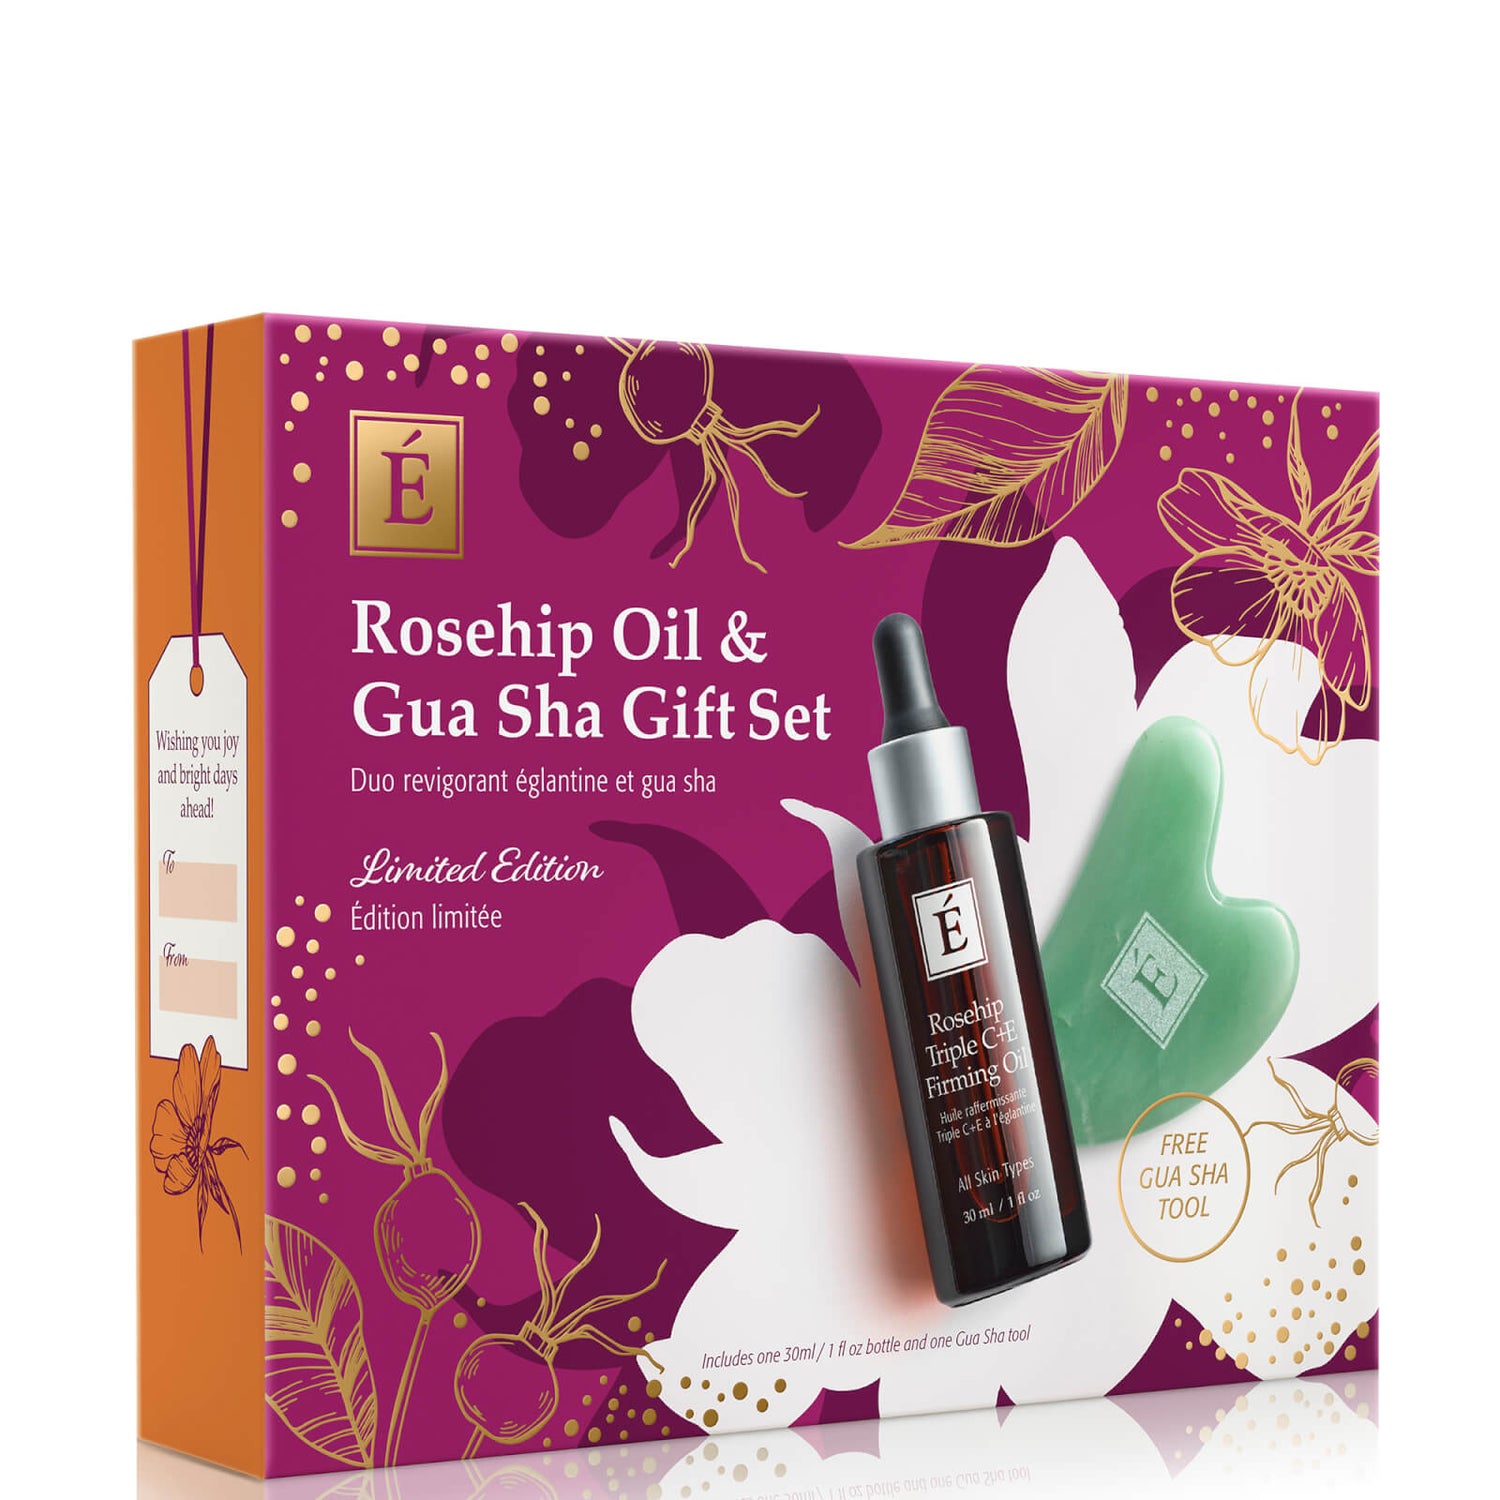 Eminence Organic Skin Care Rosehip Oil and Gua Sha Gift Set